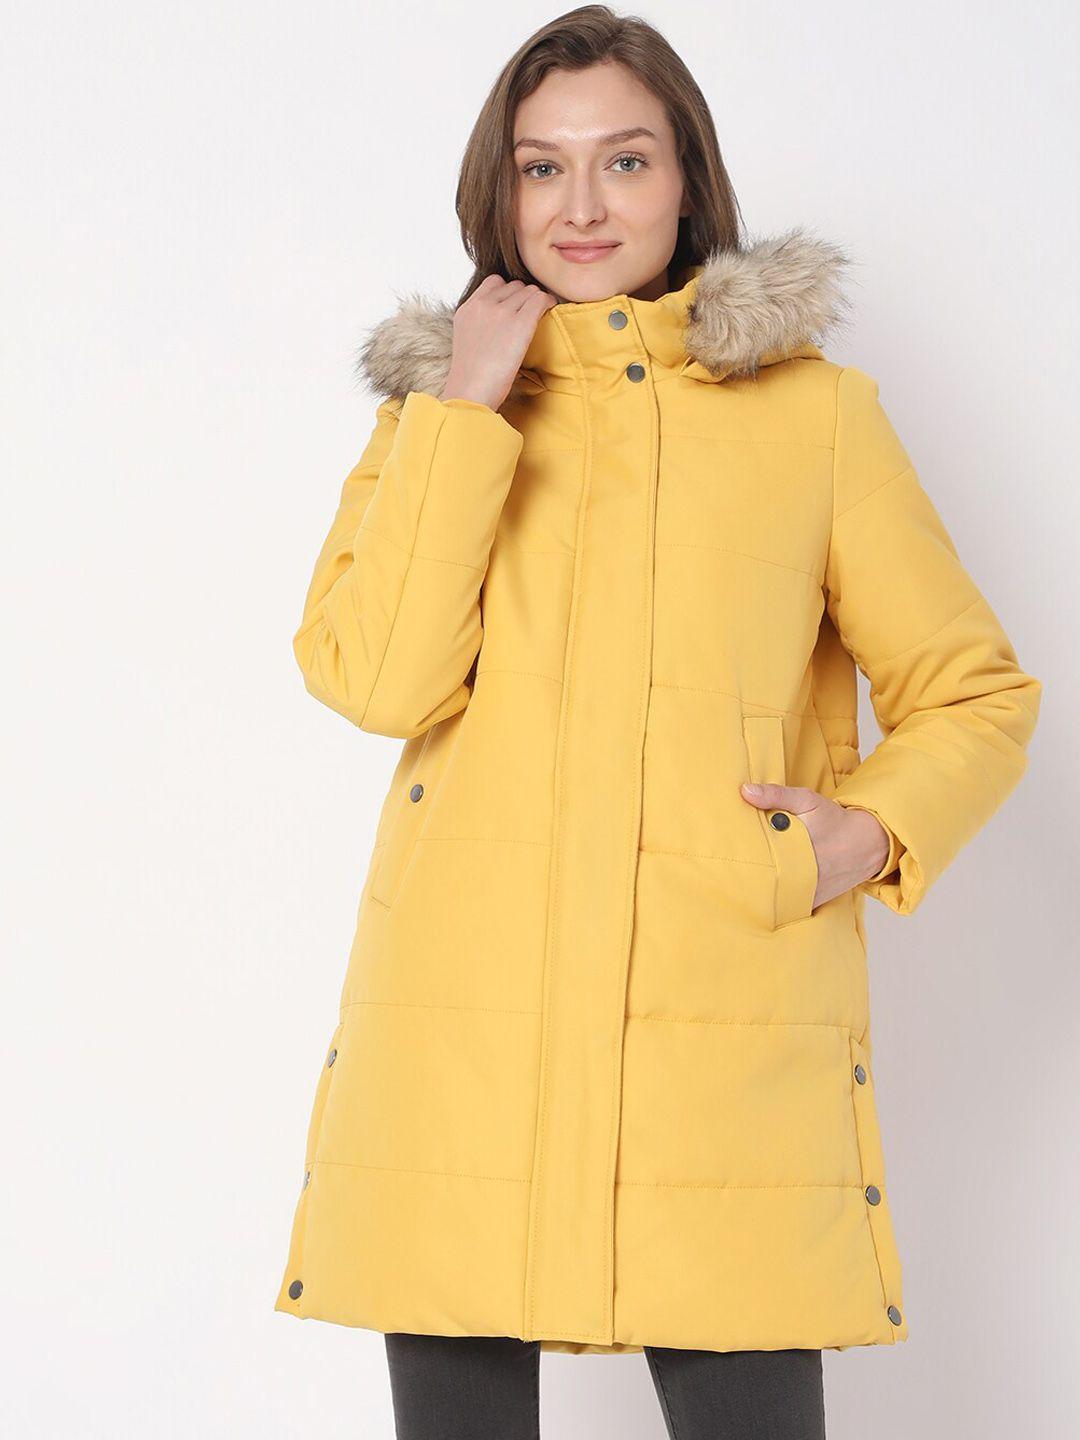 vero moda women yellow solid parka coat